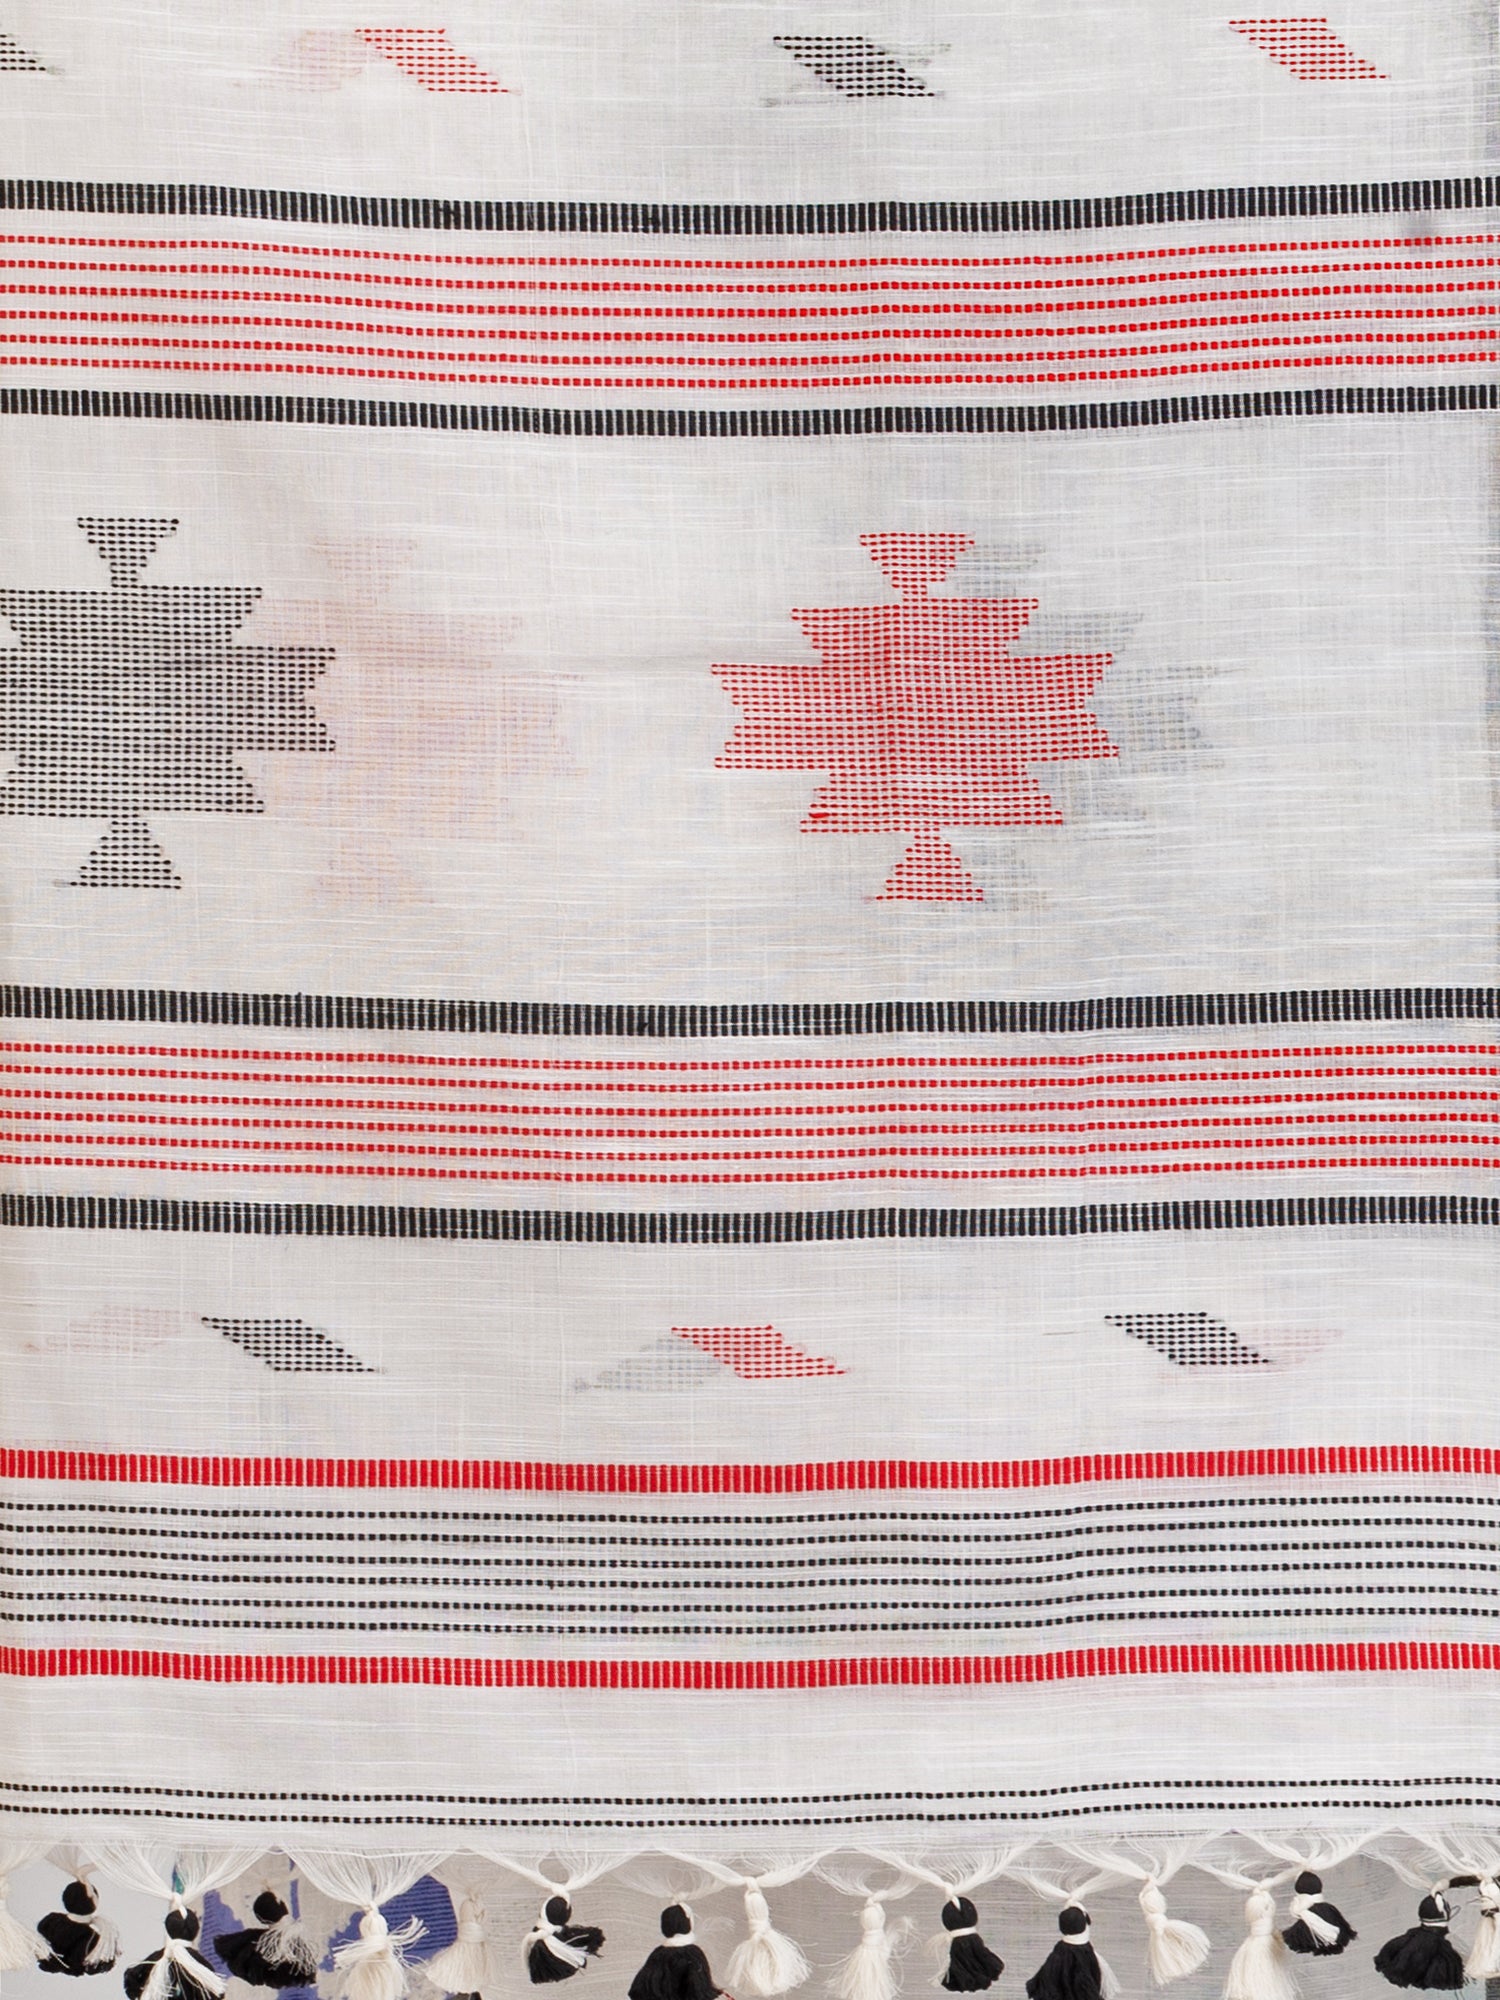 Women's White Handwoven Cotton Jamdani handloom Saree - Angoshobha